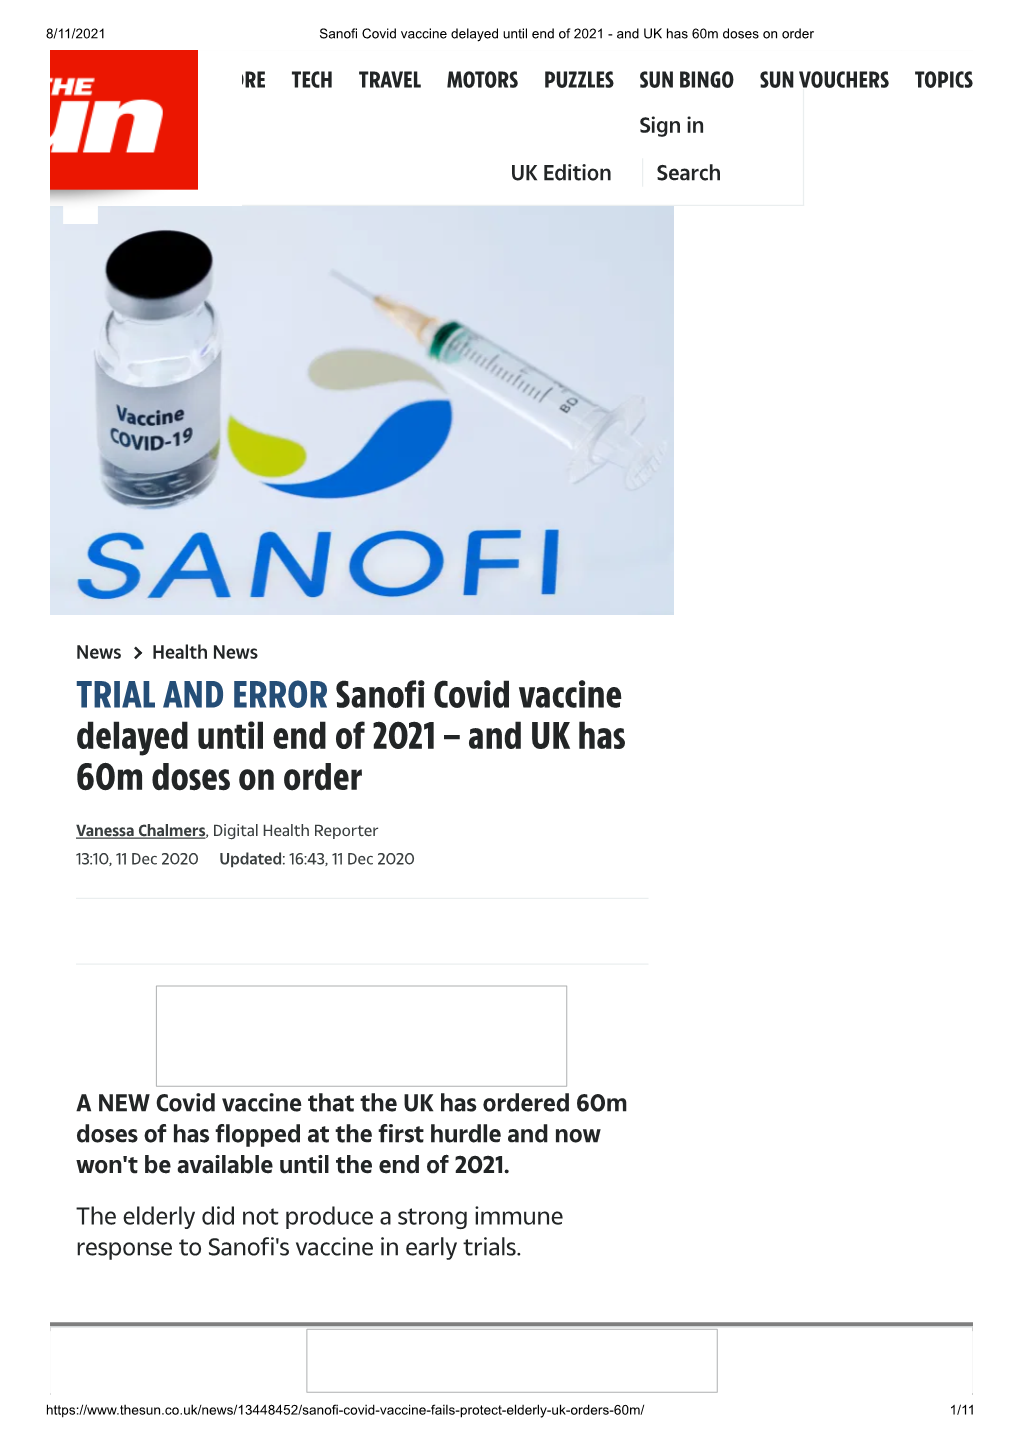 TRIAL and ERROR Sanofi Covid Vaccine Delayed Until